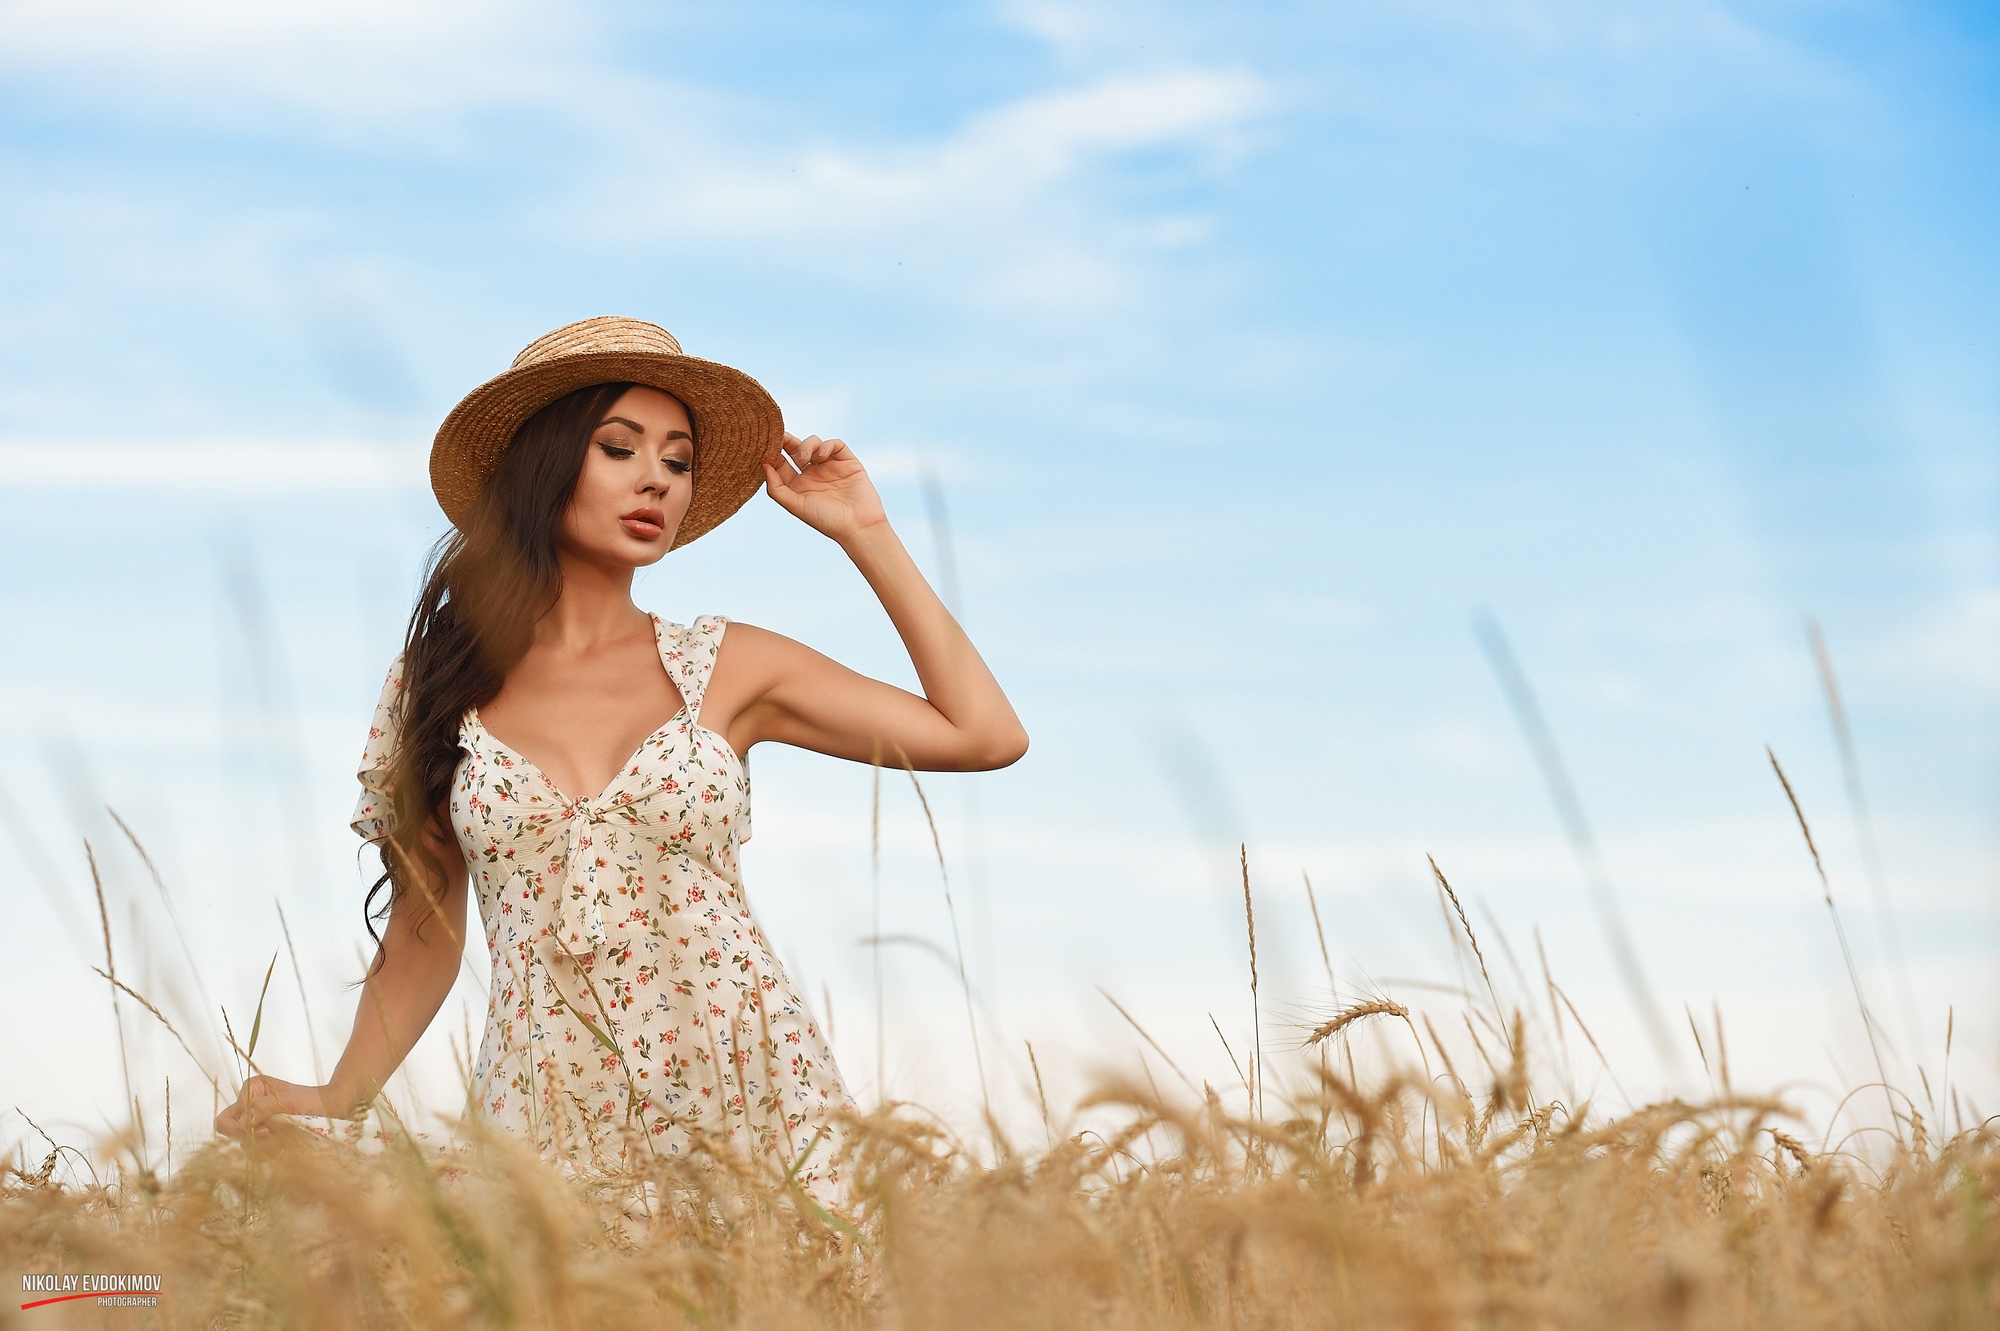 Nikolay Evdokimov Dress Summer Dress Sky Women Outdoors Clouds Wheat Straw Hat Nature Brunette Women 2000x1331